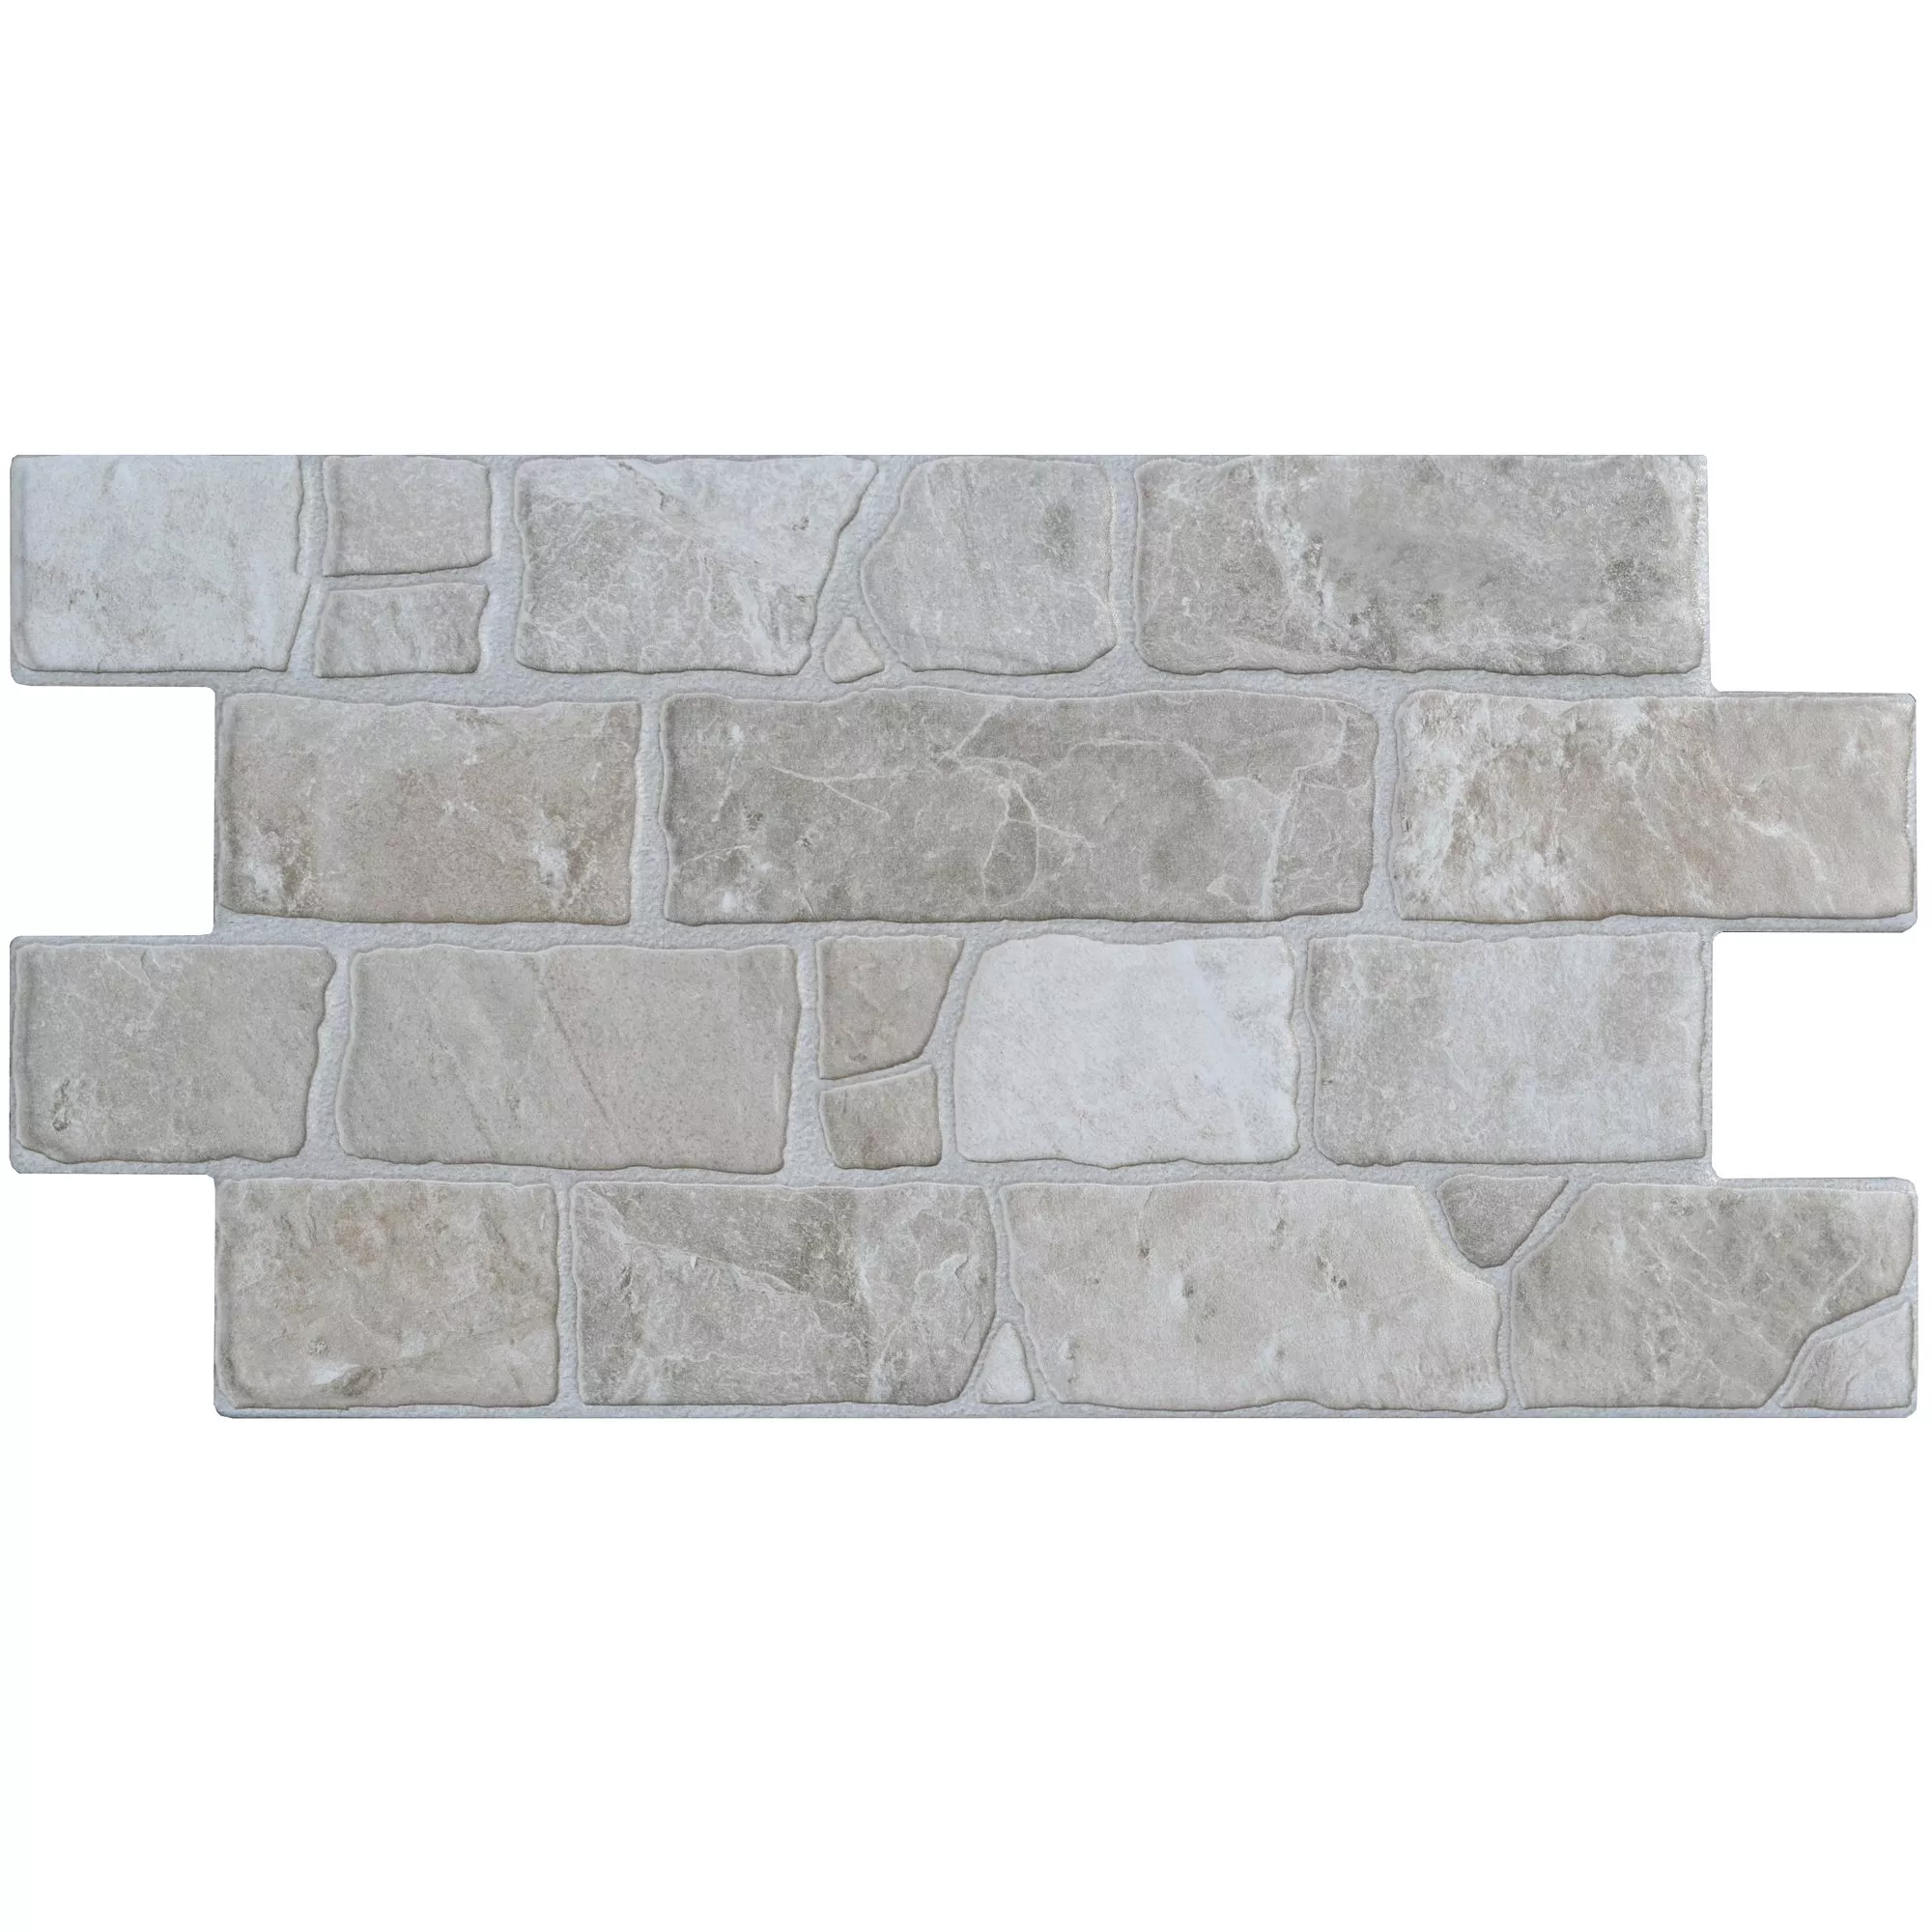 Sample Wall Tiles Brickstones Senegal Porcelain Stoneware White